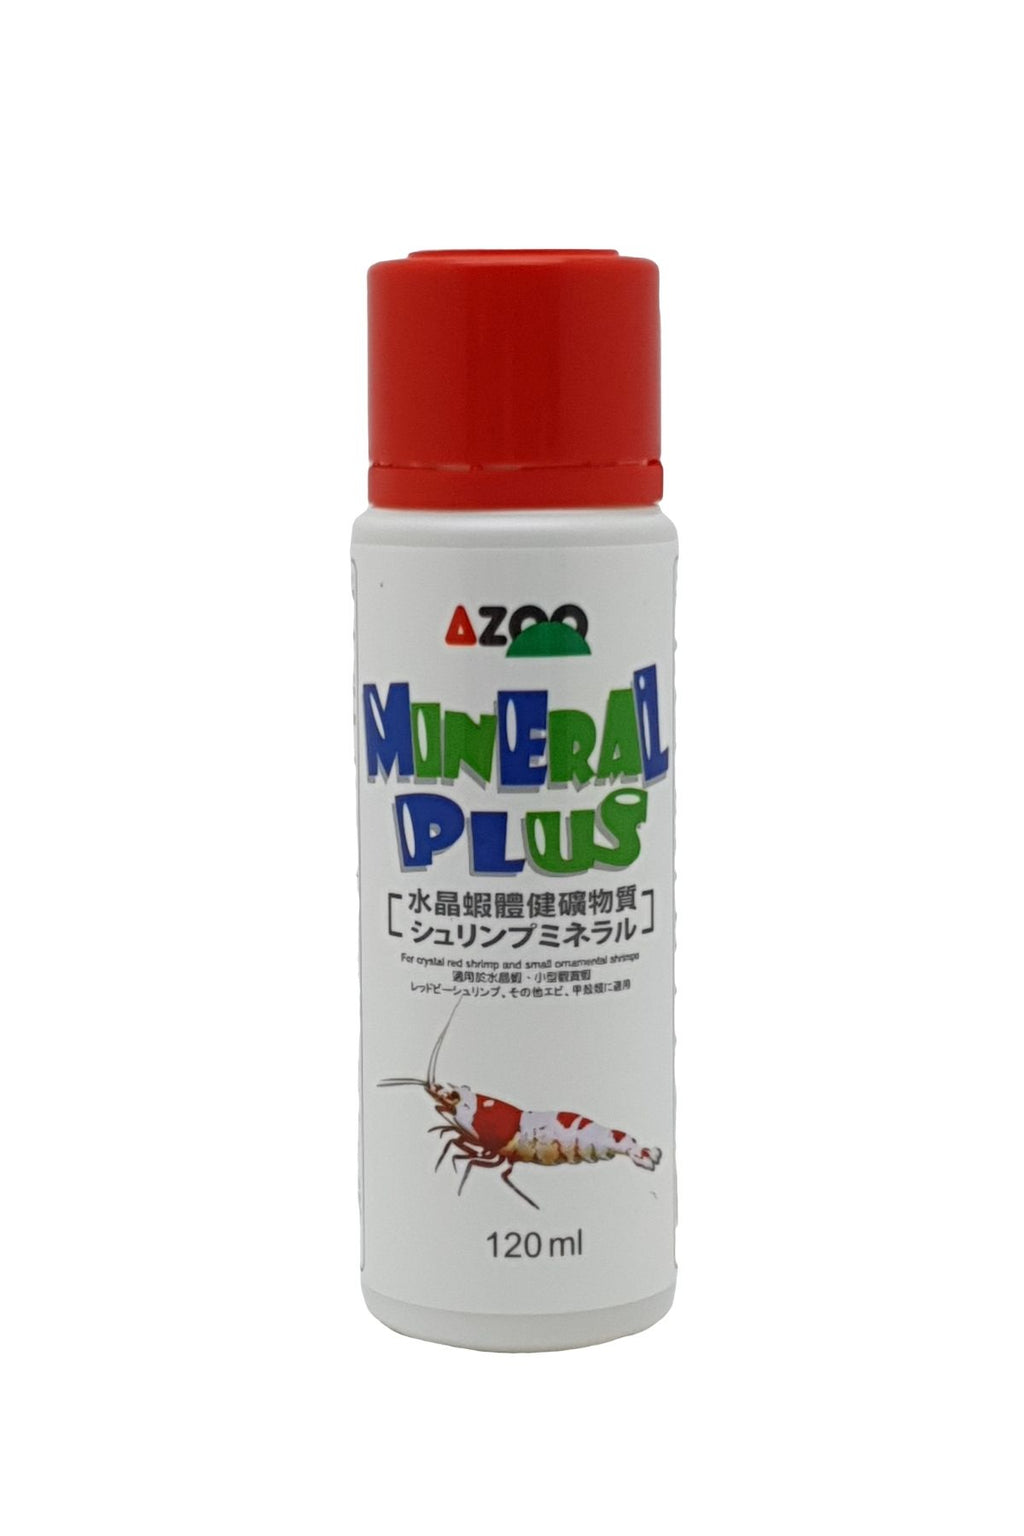 Azoo Mineral Plus (120ML)